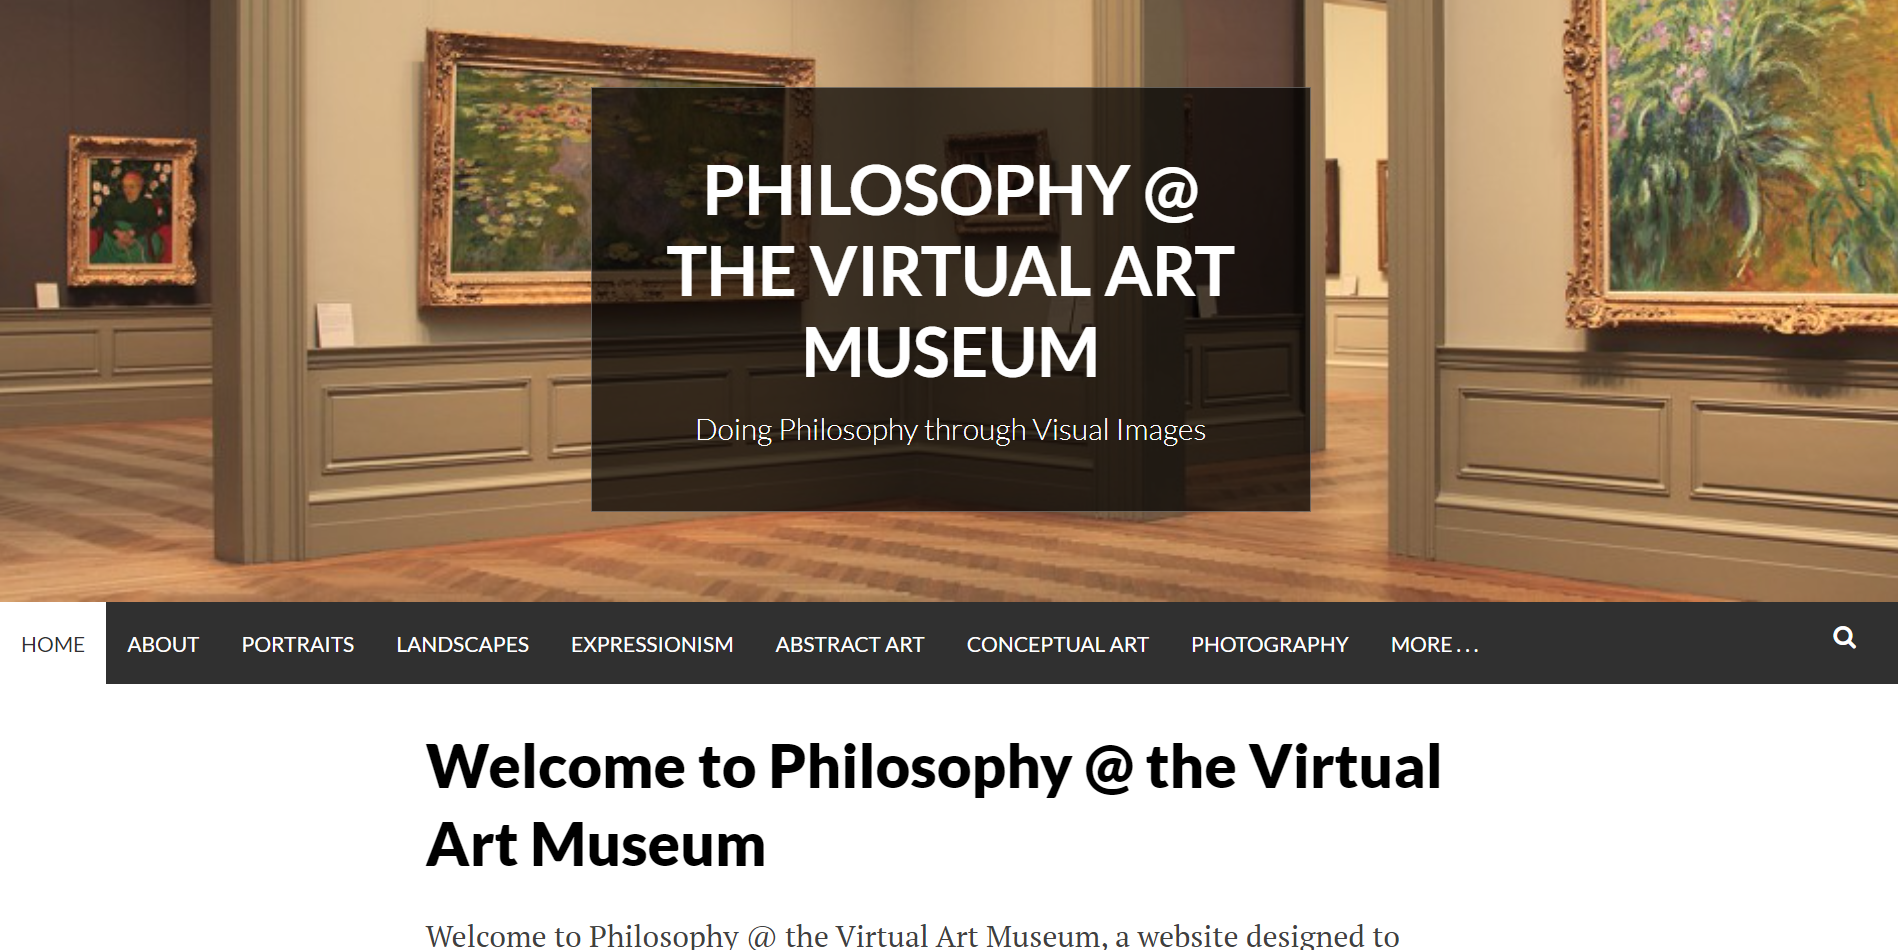 Philosophy @ the Virtual Art Museum